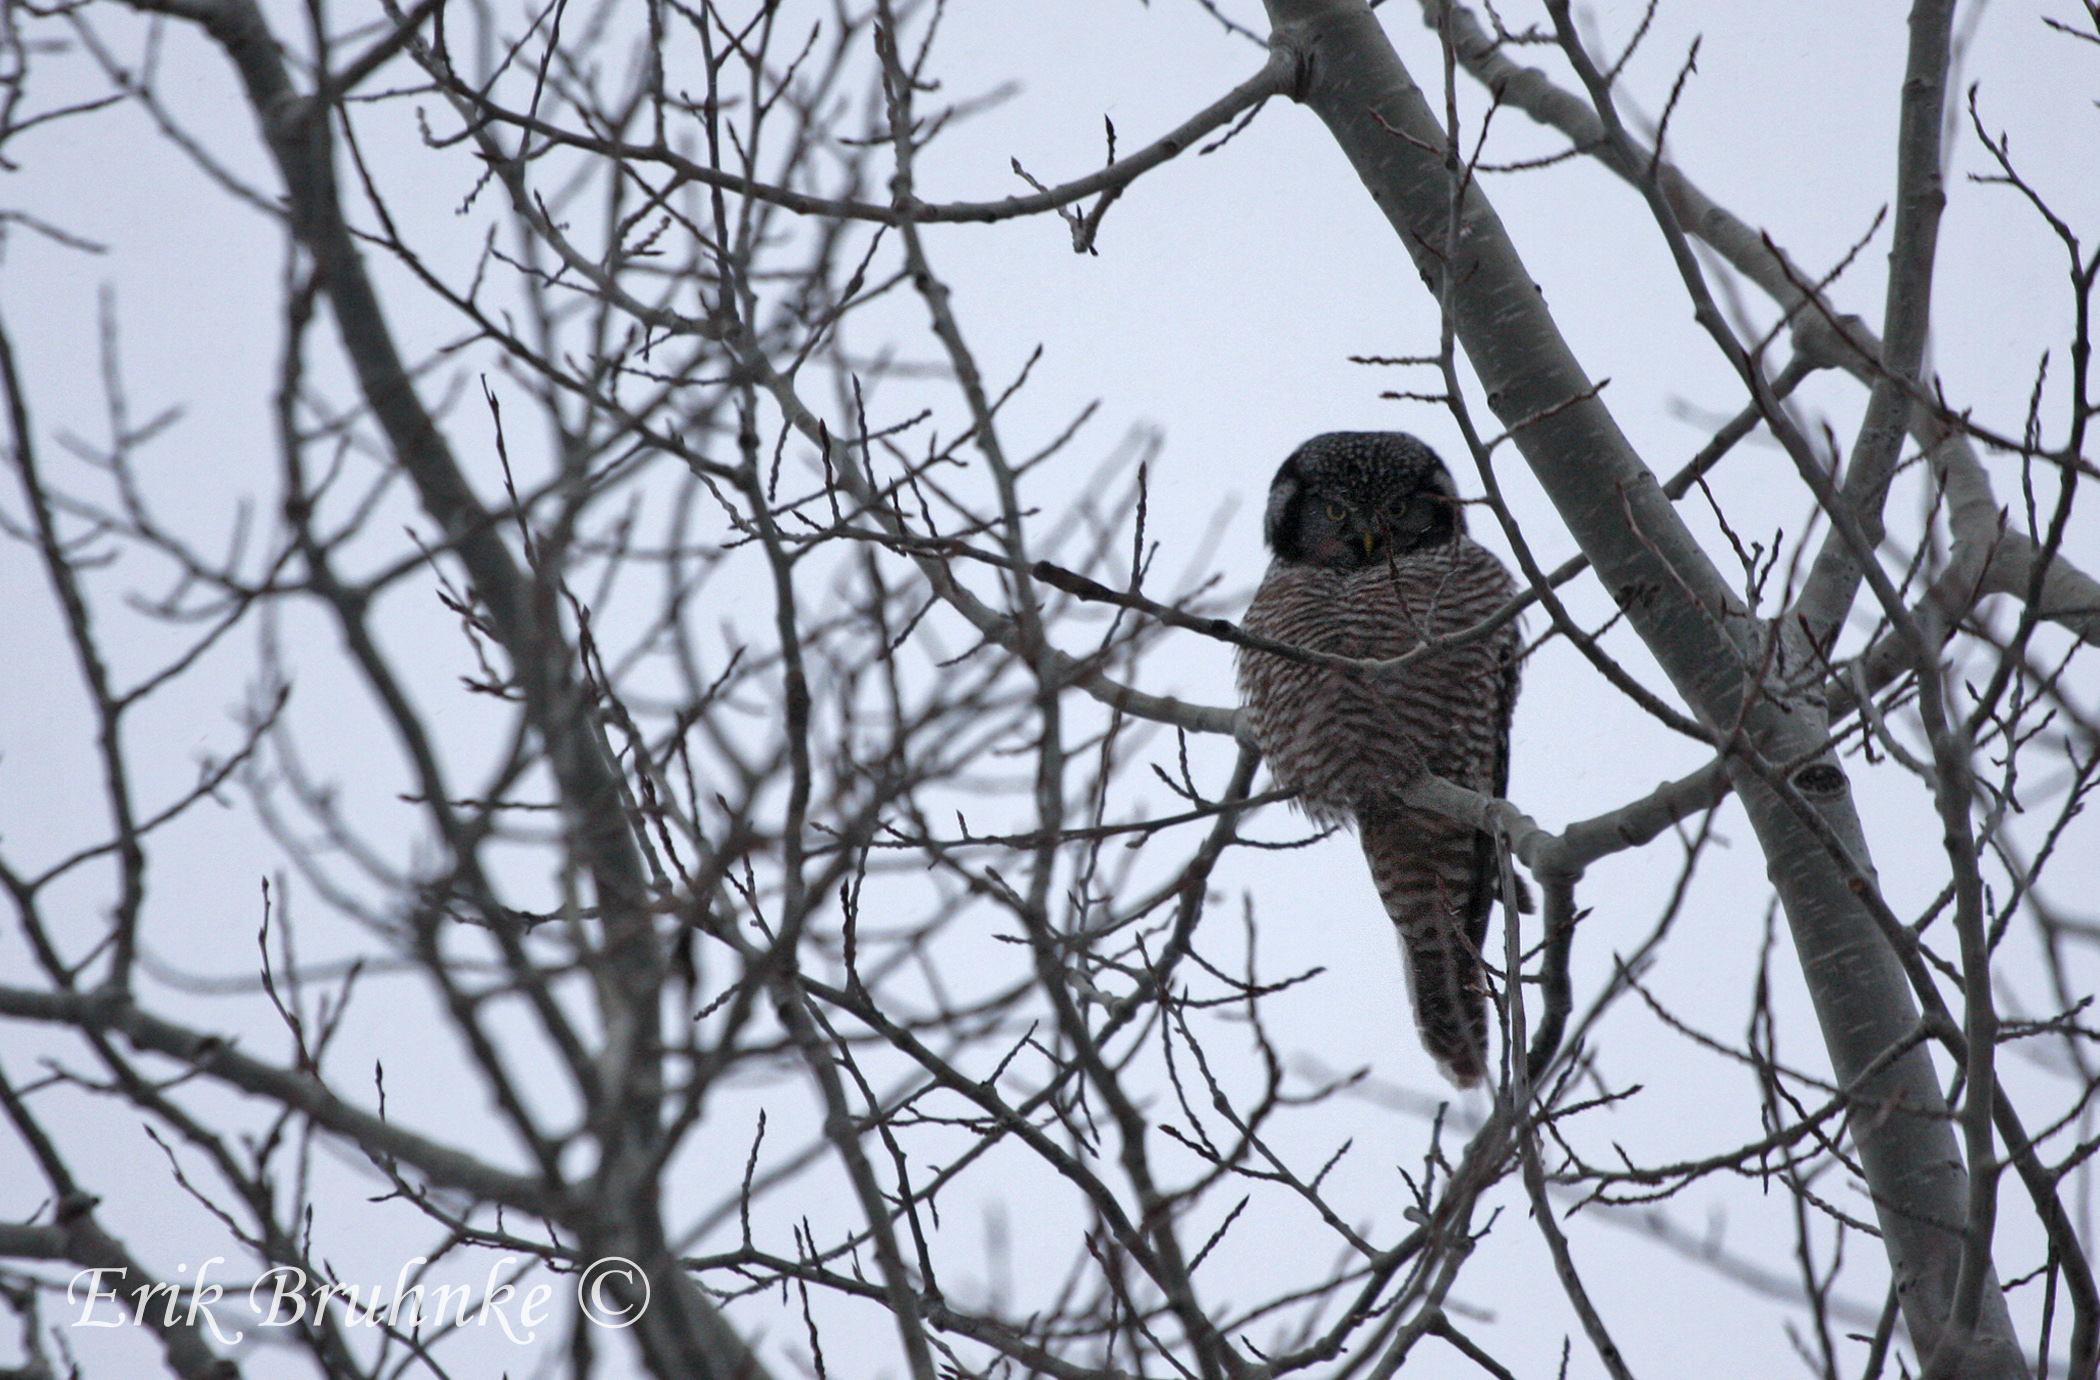 Northern Hawk Owl.  Photo by Erik Bruhnke.